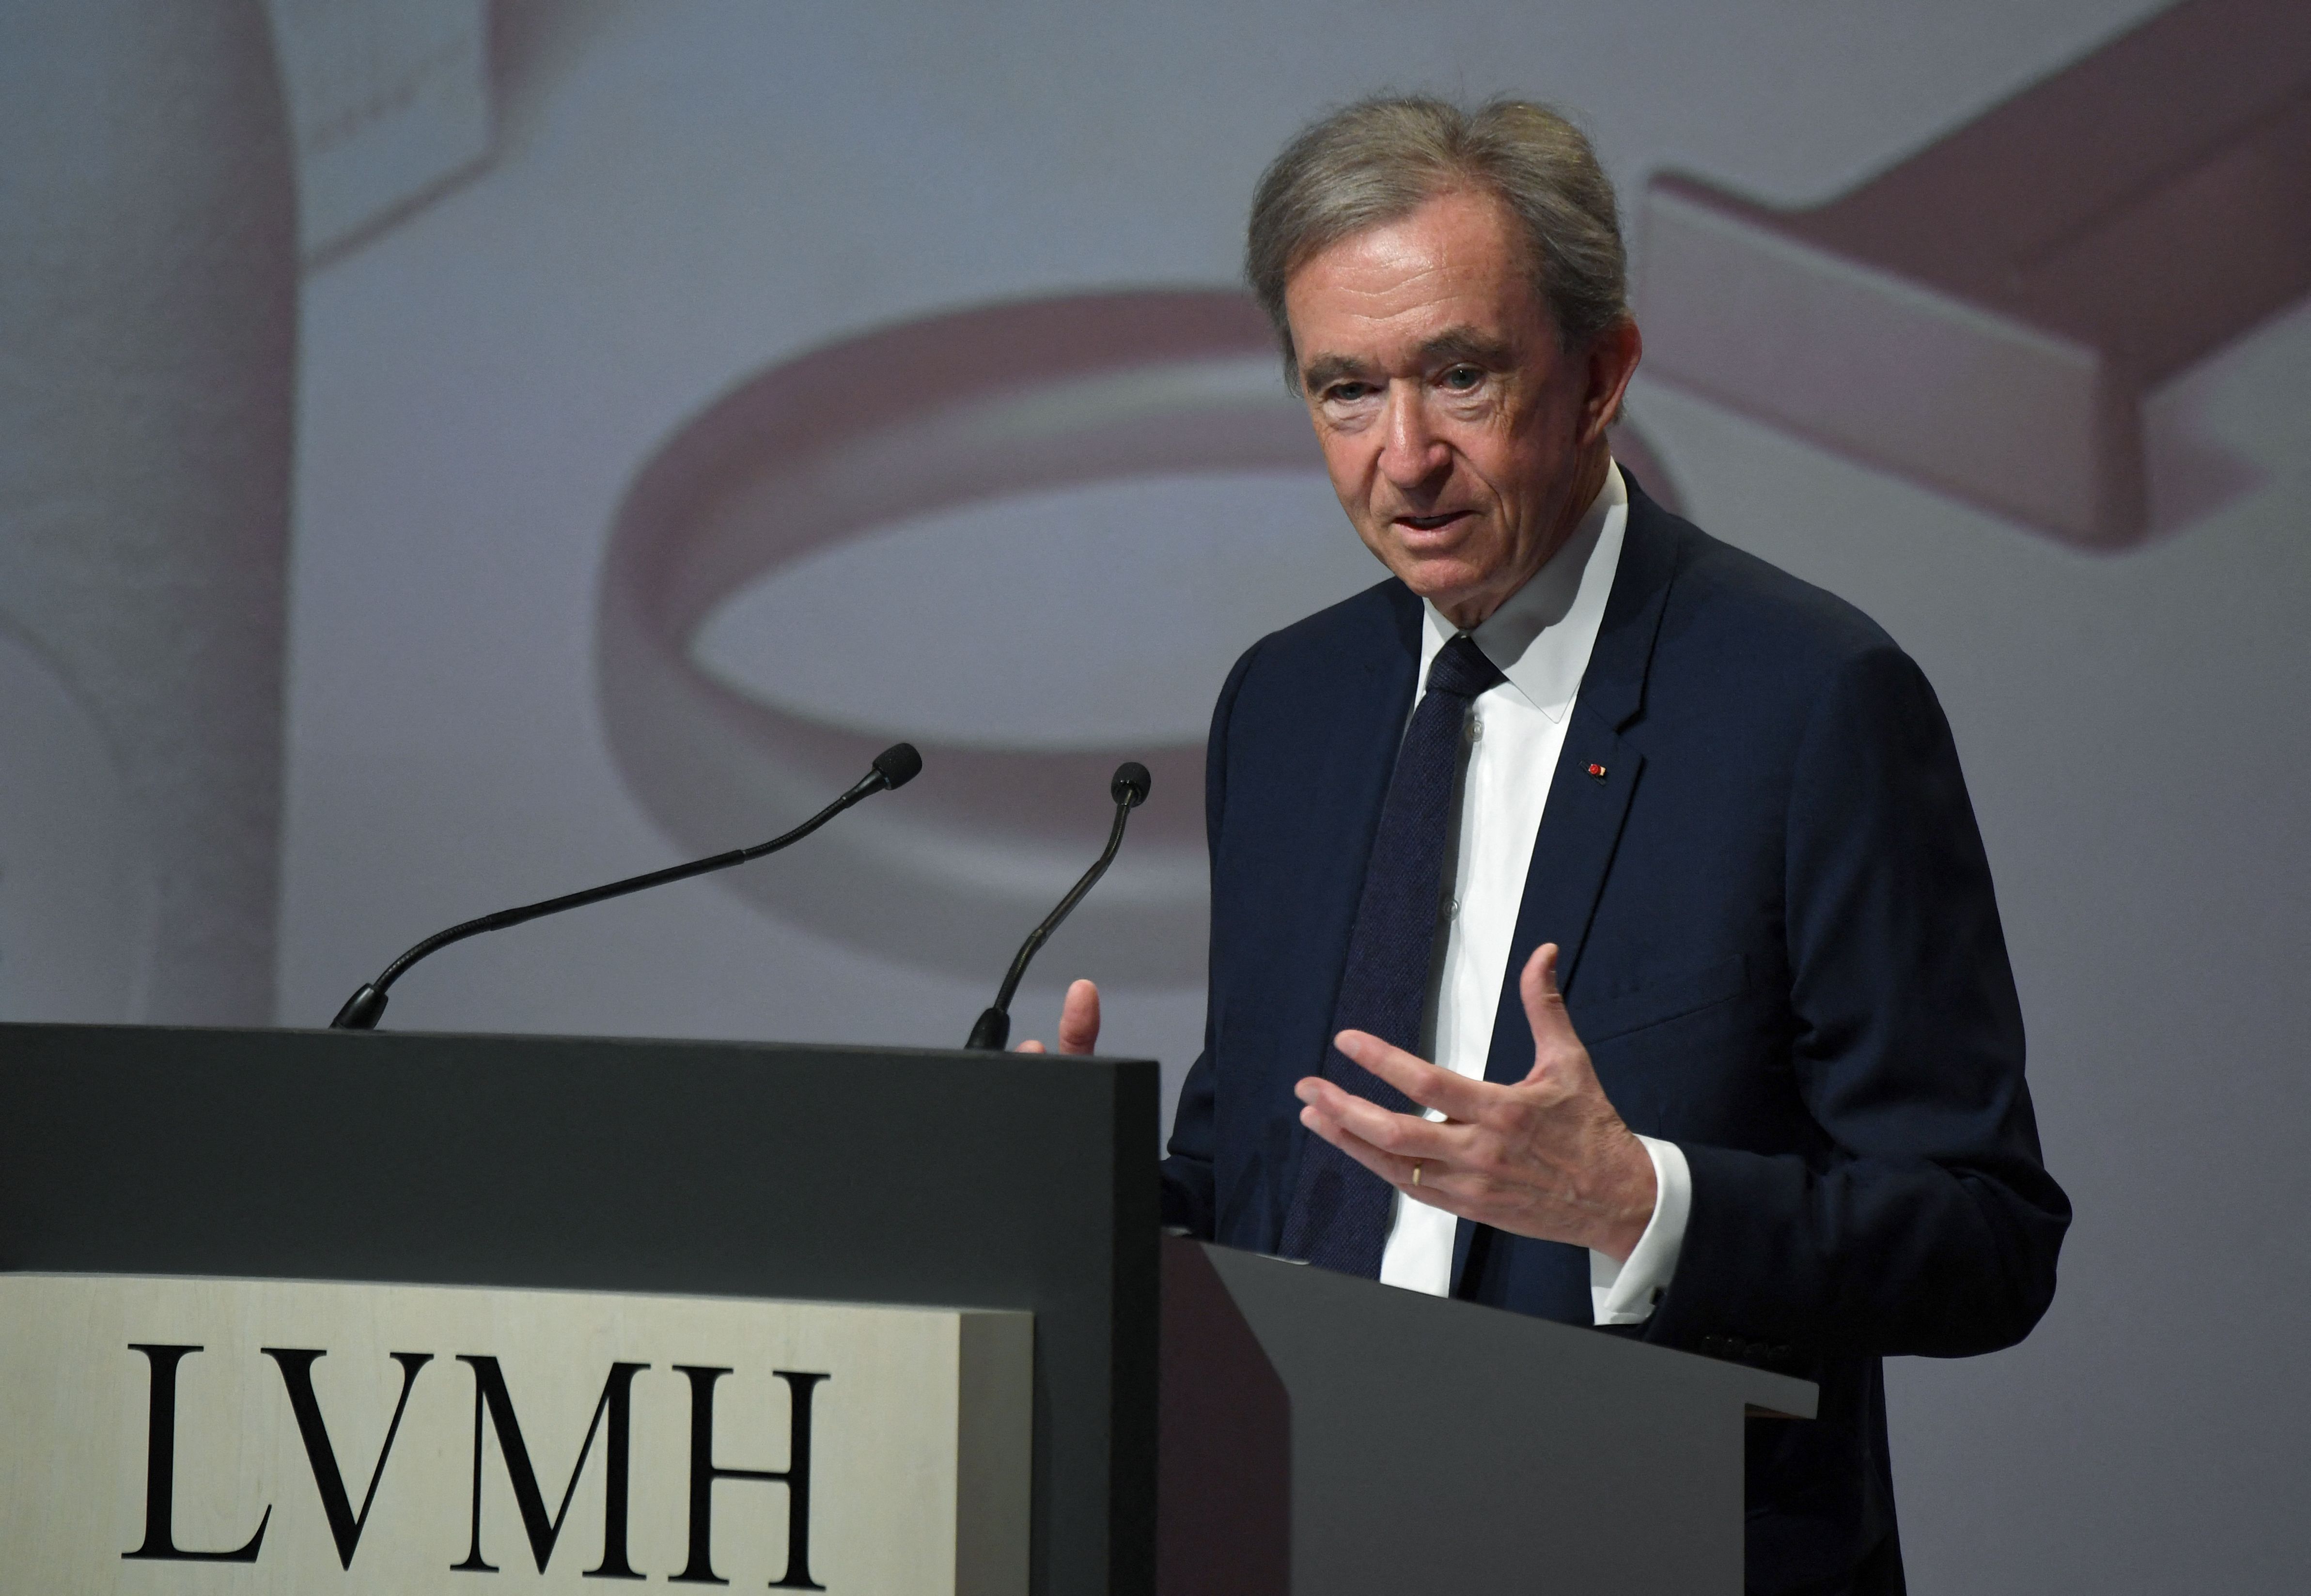 LVMH Shares Soar Amid Billionaire Bernard Arnault's Company Shakeup